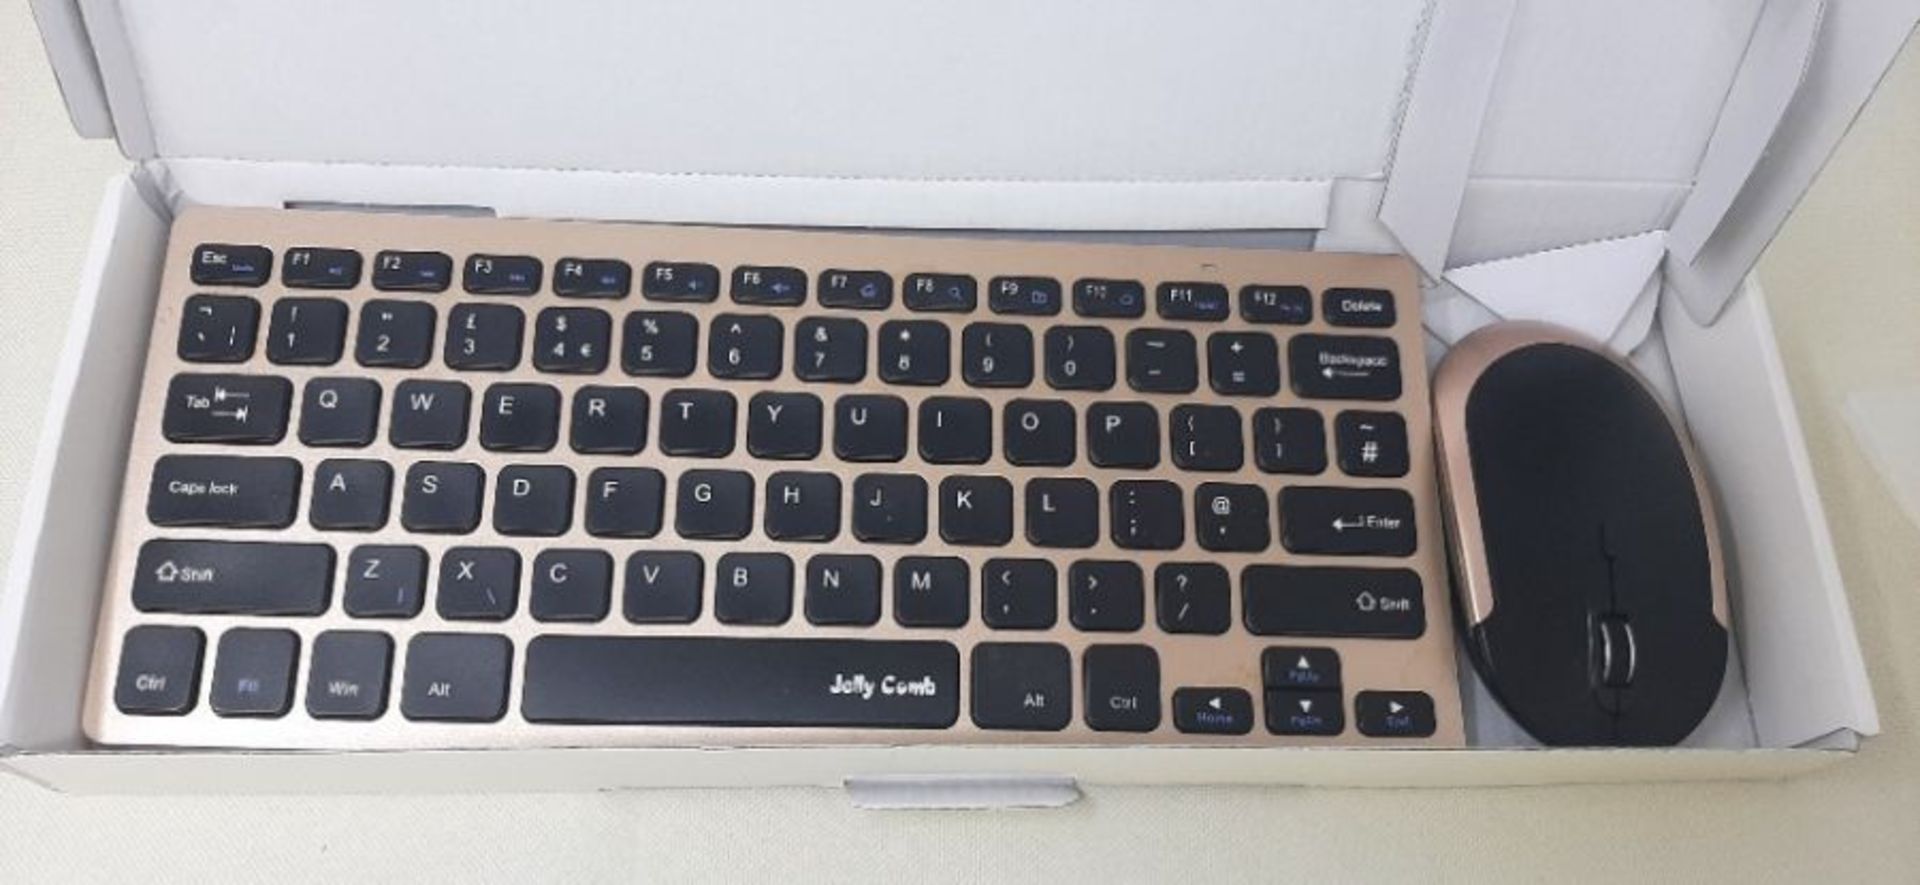 Keyboard and Mouse Set Ultra Slim, Jelly Comb KUT019 2.4G Compact Wireless Keyboard Mo - Image 2 of 2